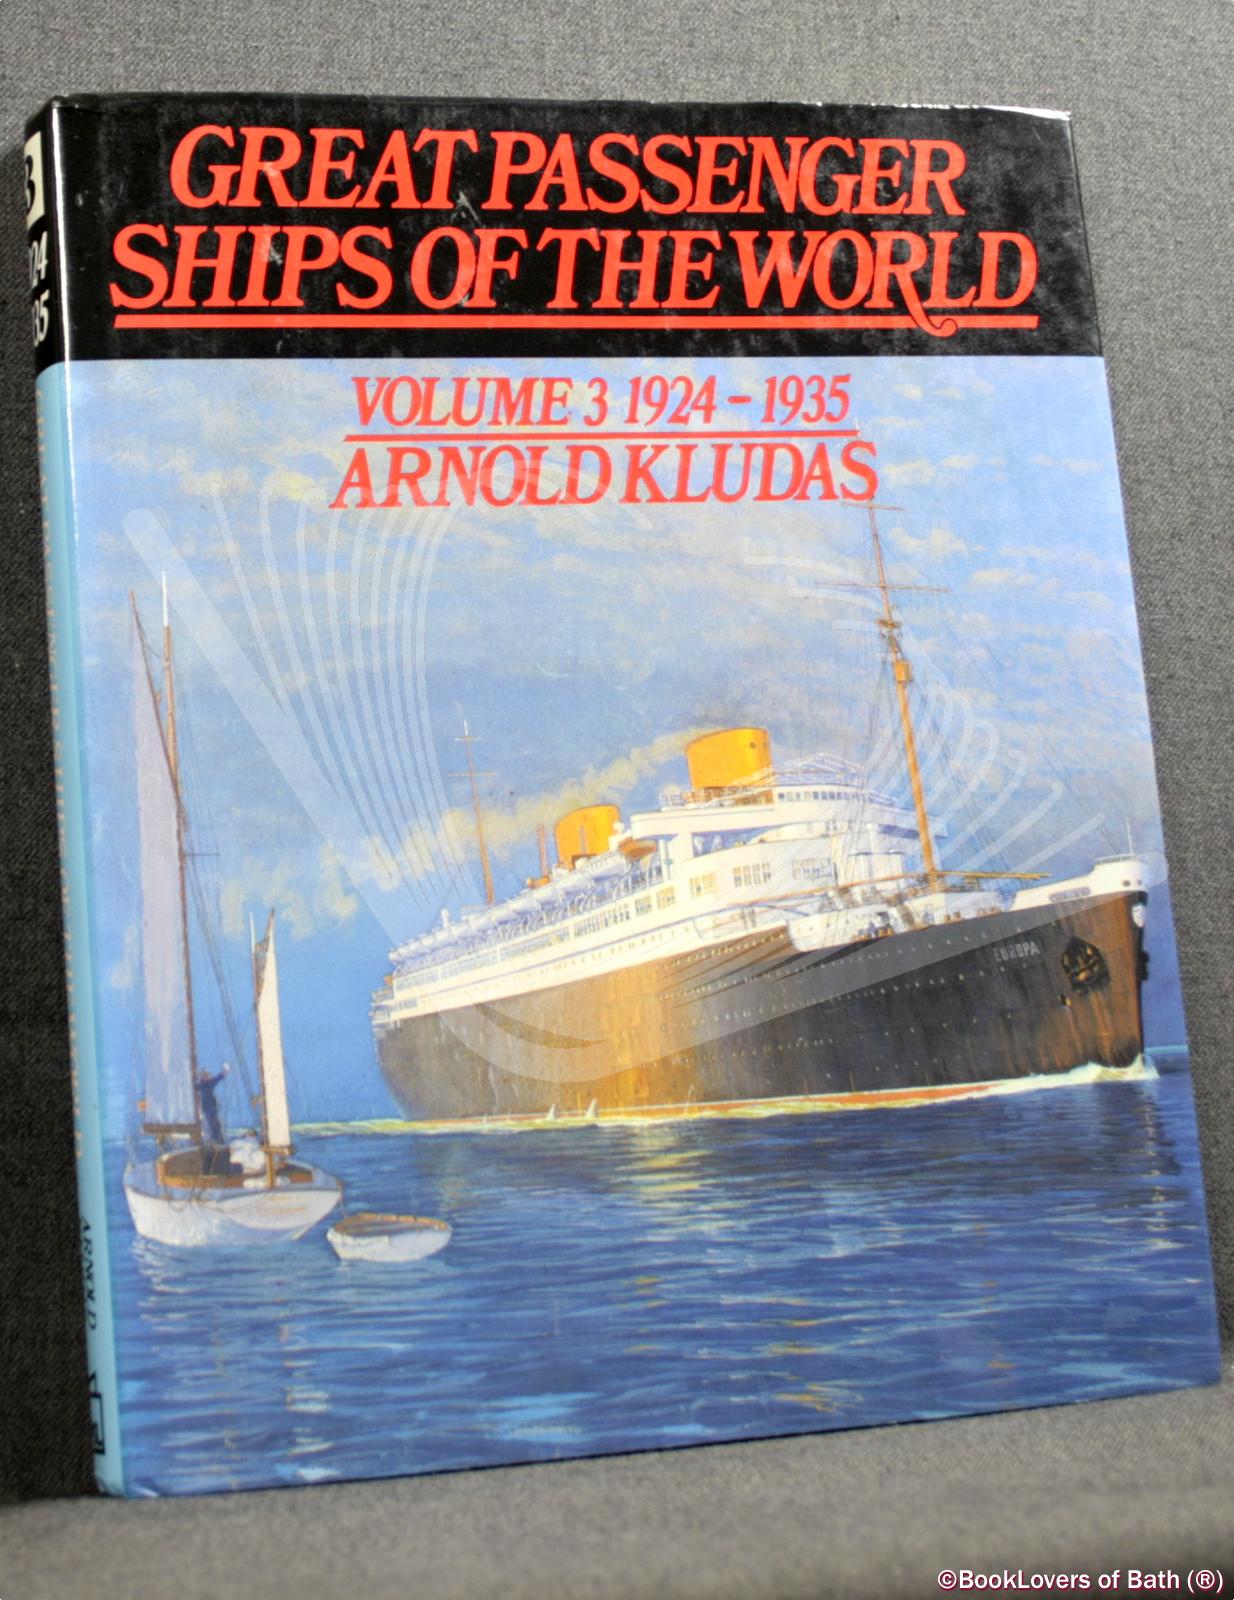 Great Passenger Ships of the World: Volume 3 1924-35 - Arnold Kludas